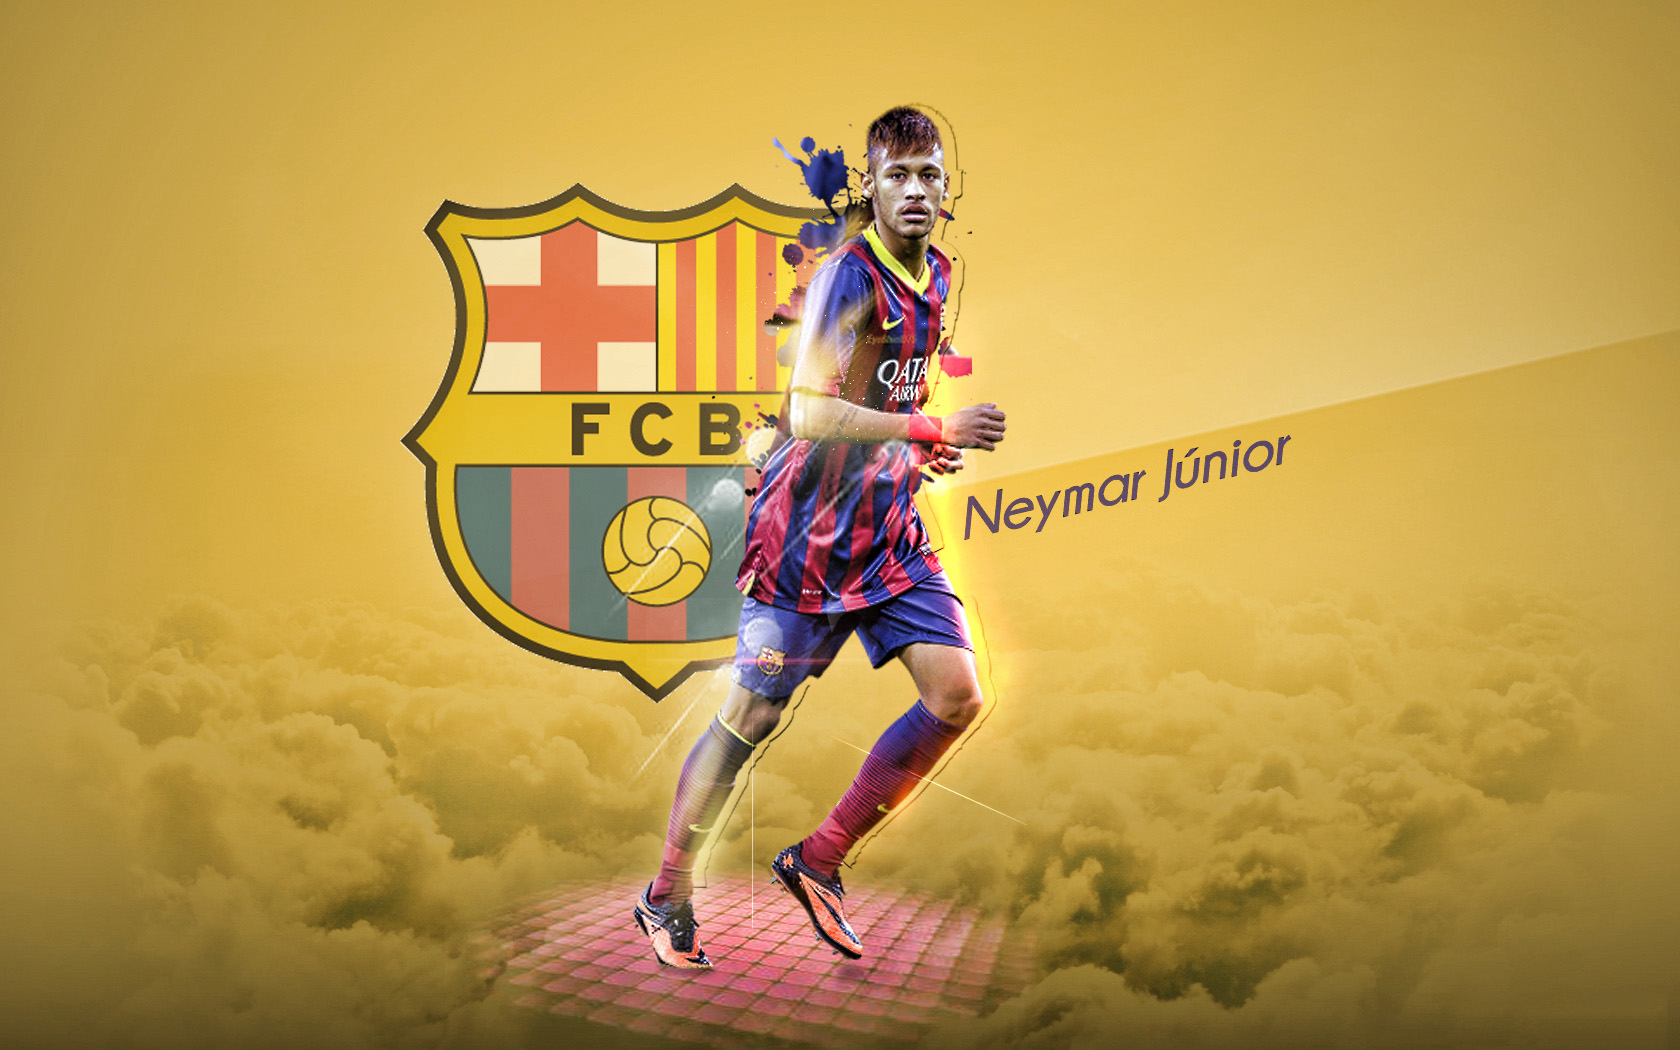 neymar hd wallpaper download,graphic design,fun,font,illustration,graphics